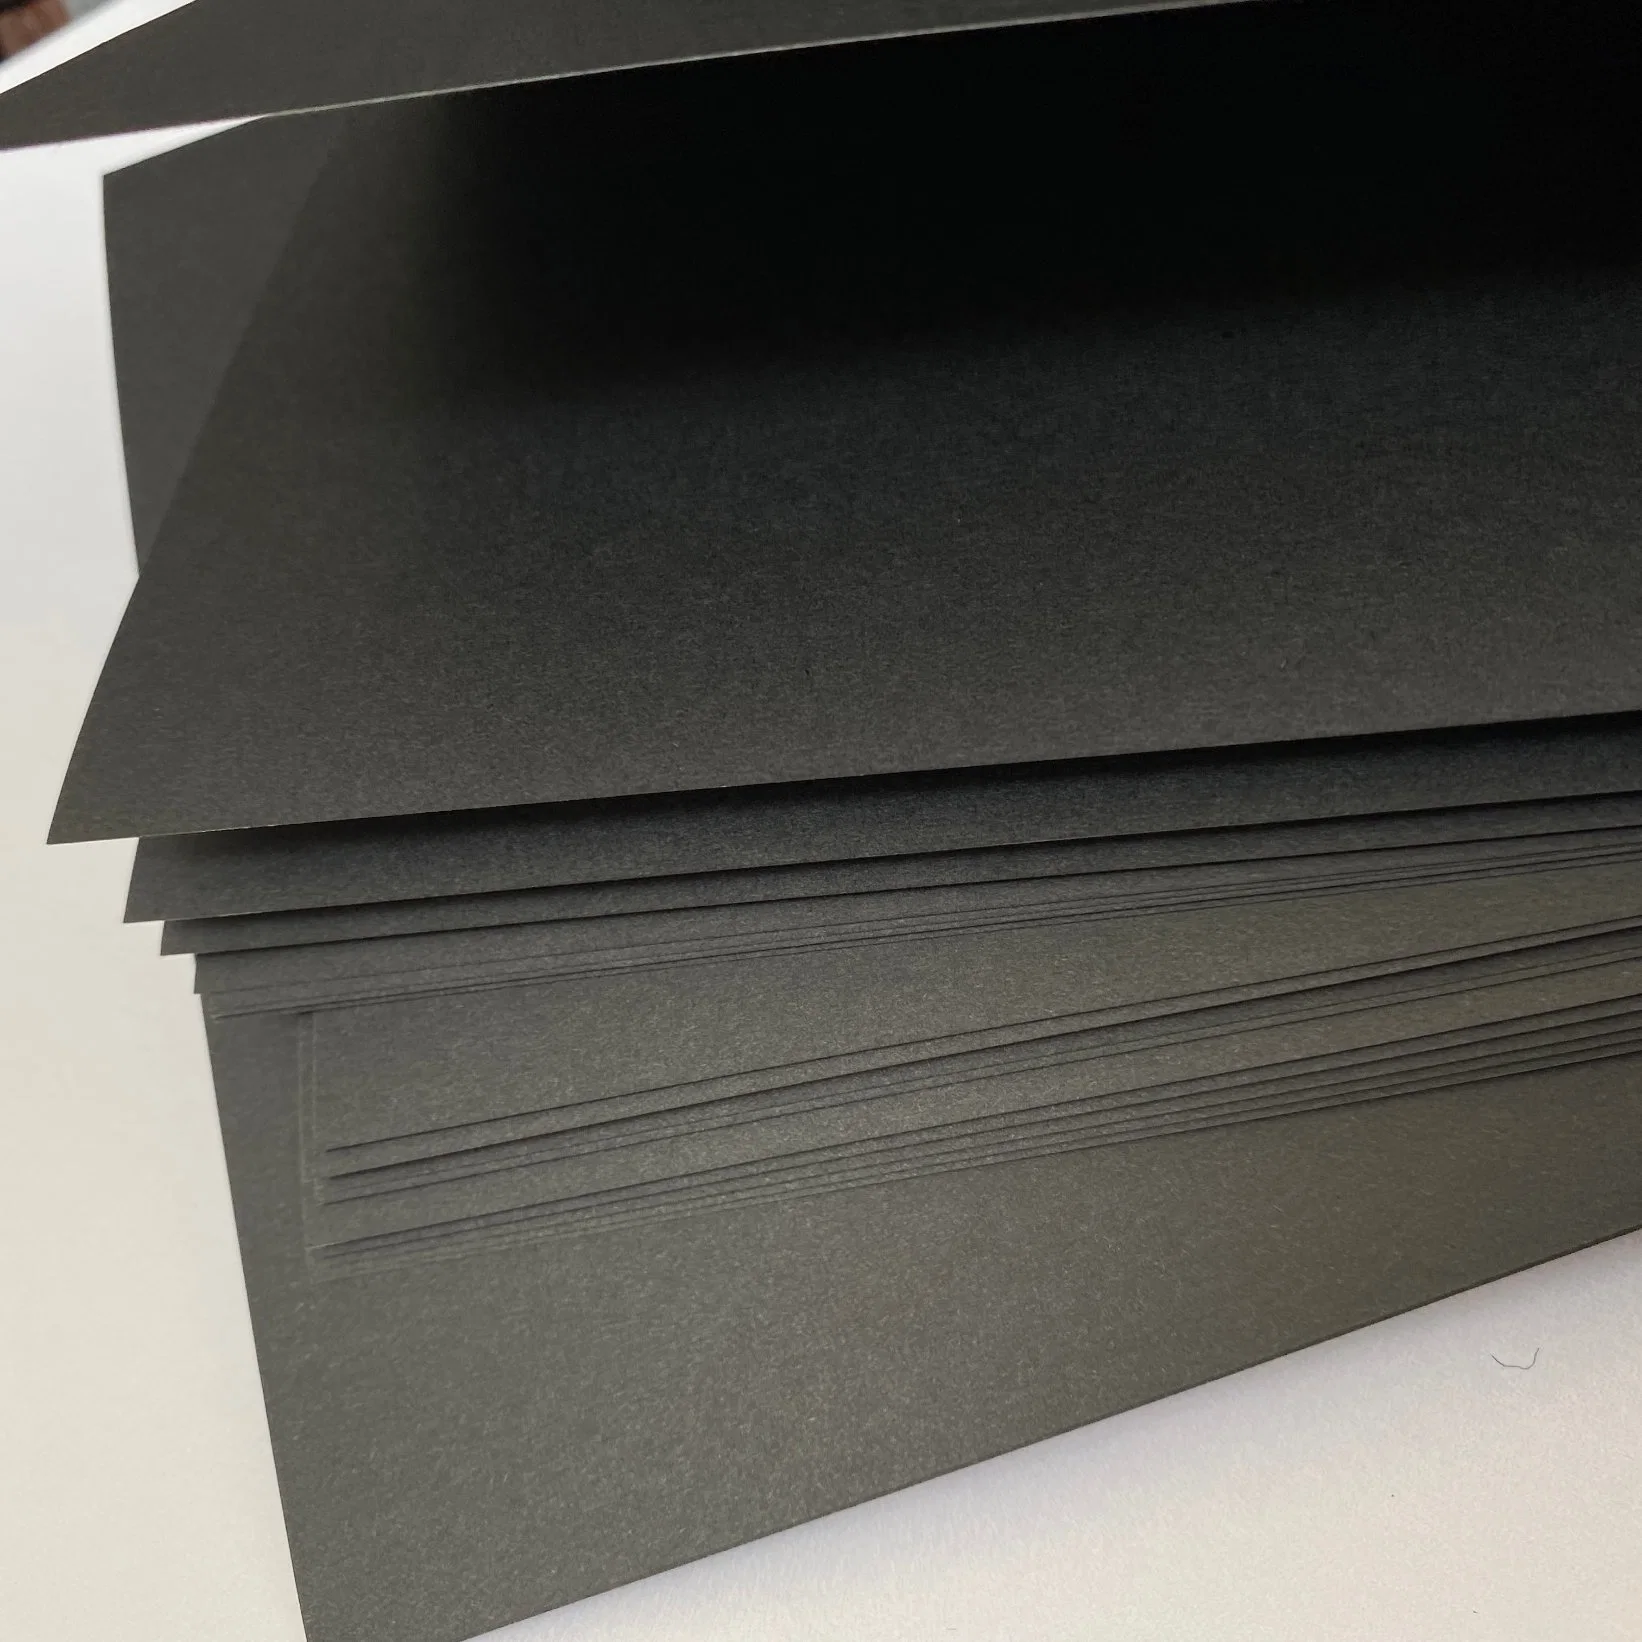 180g Black Cardboard/Black Paper